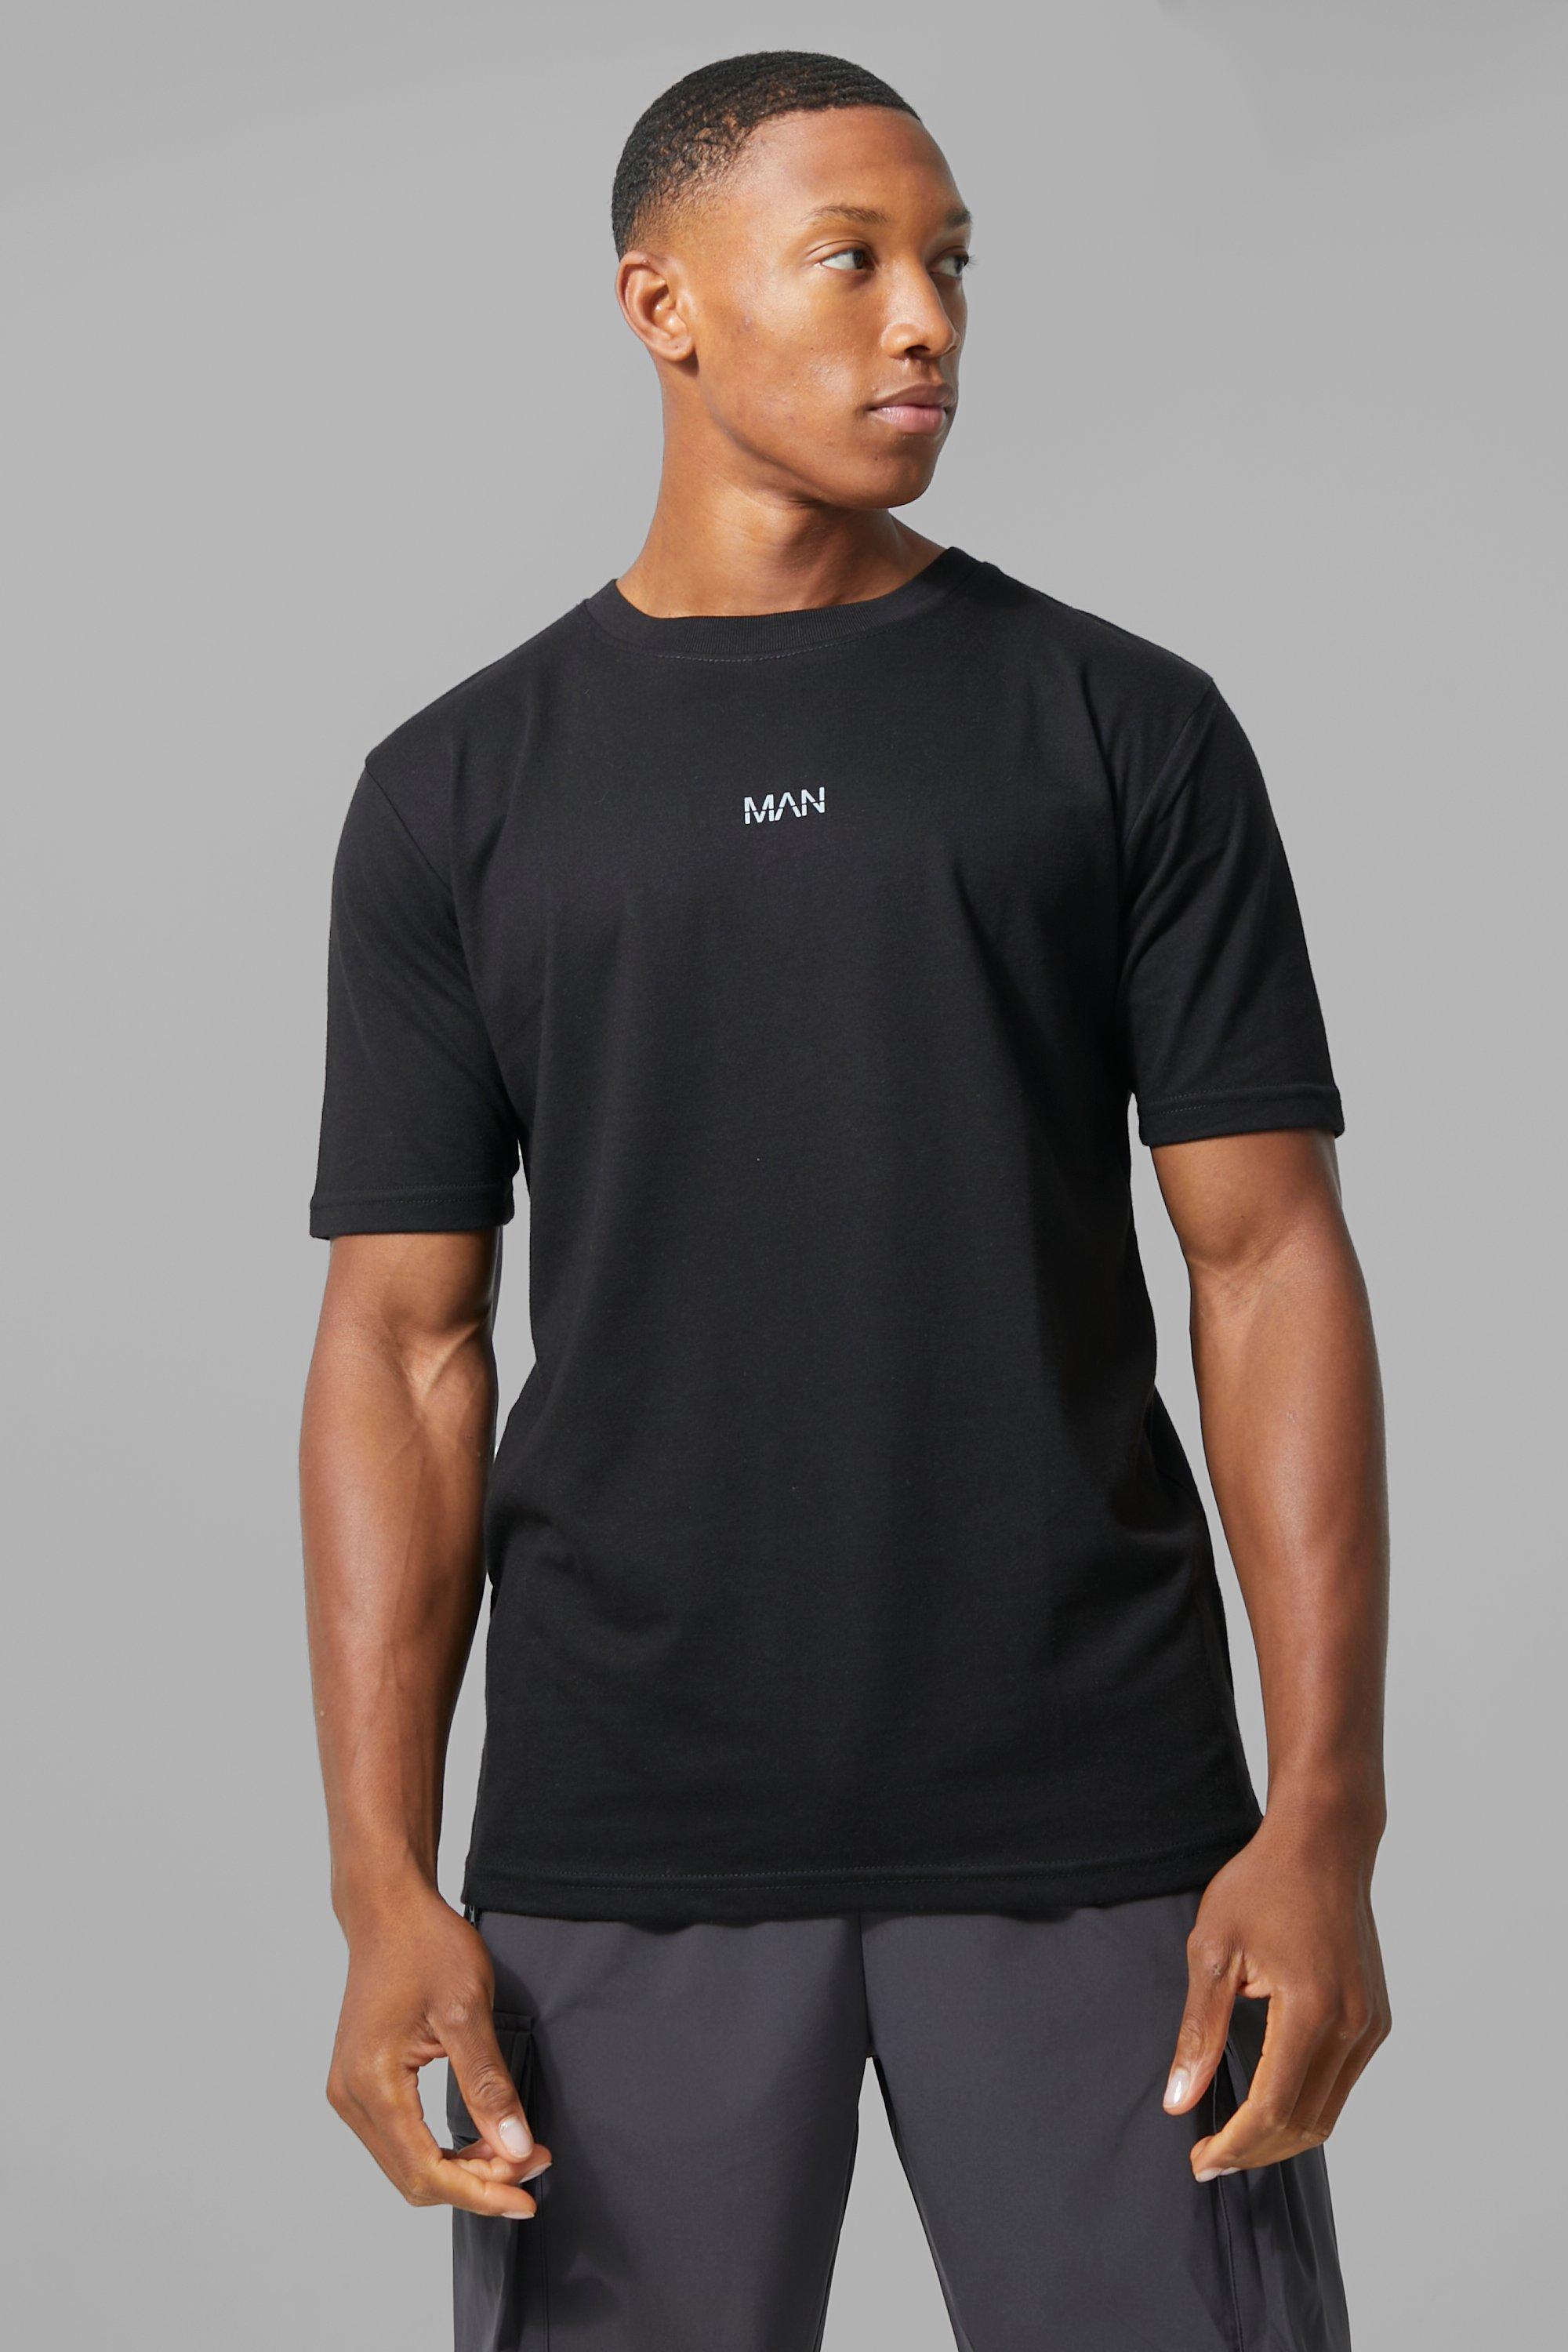 man active gym basic t-shirt - black - xs, black